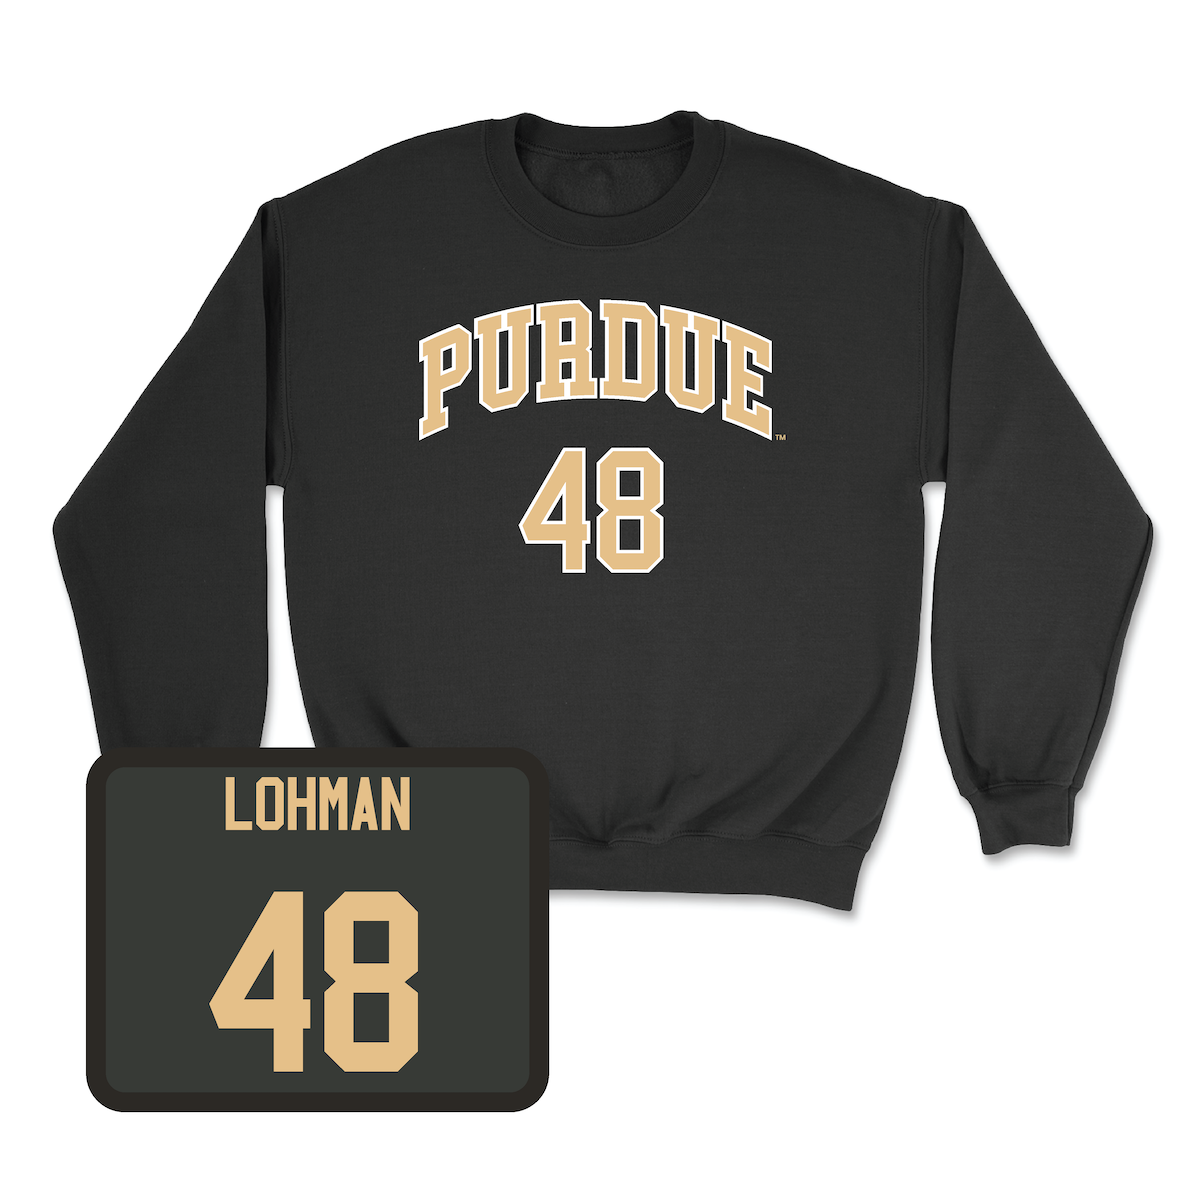 Purdue Baseball - Behold the new Black & Camo uniforms